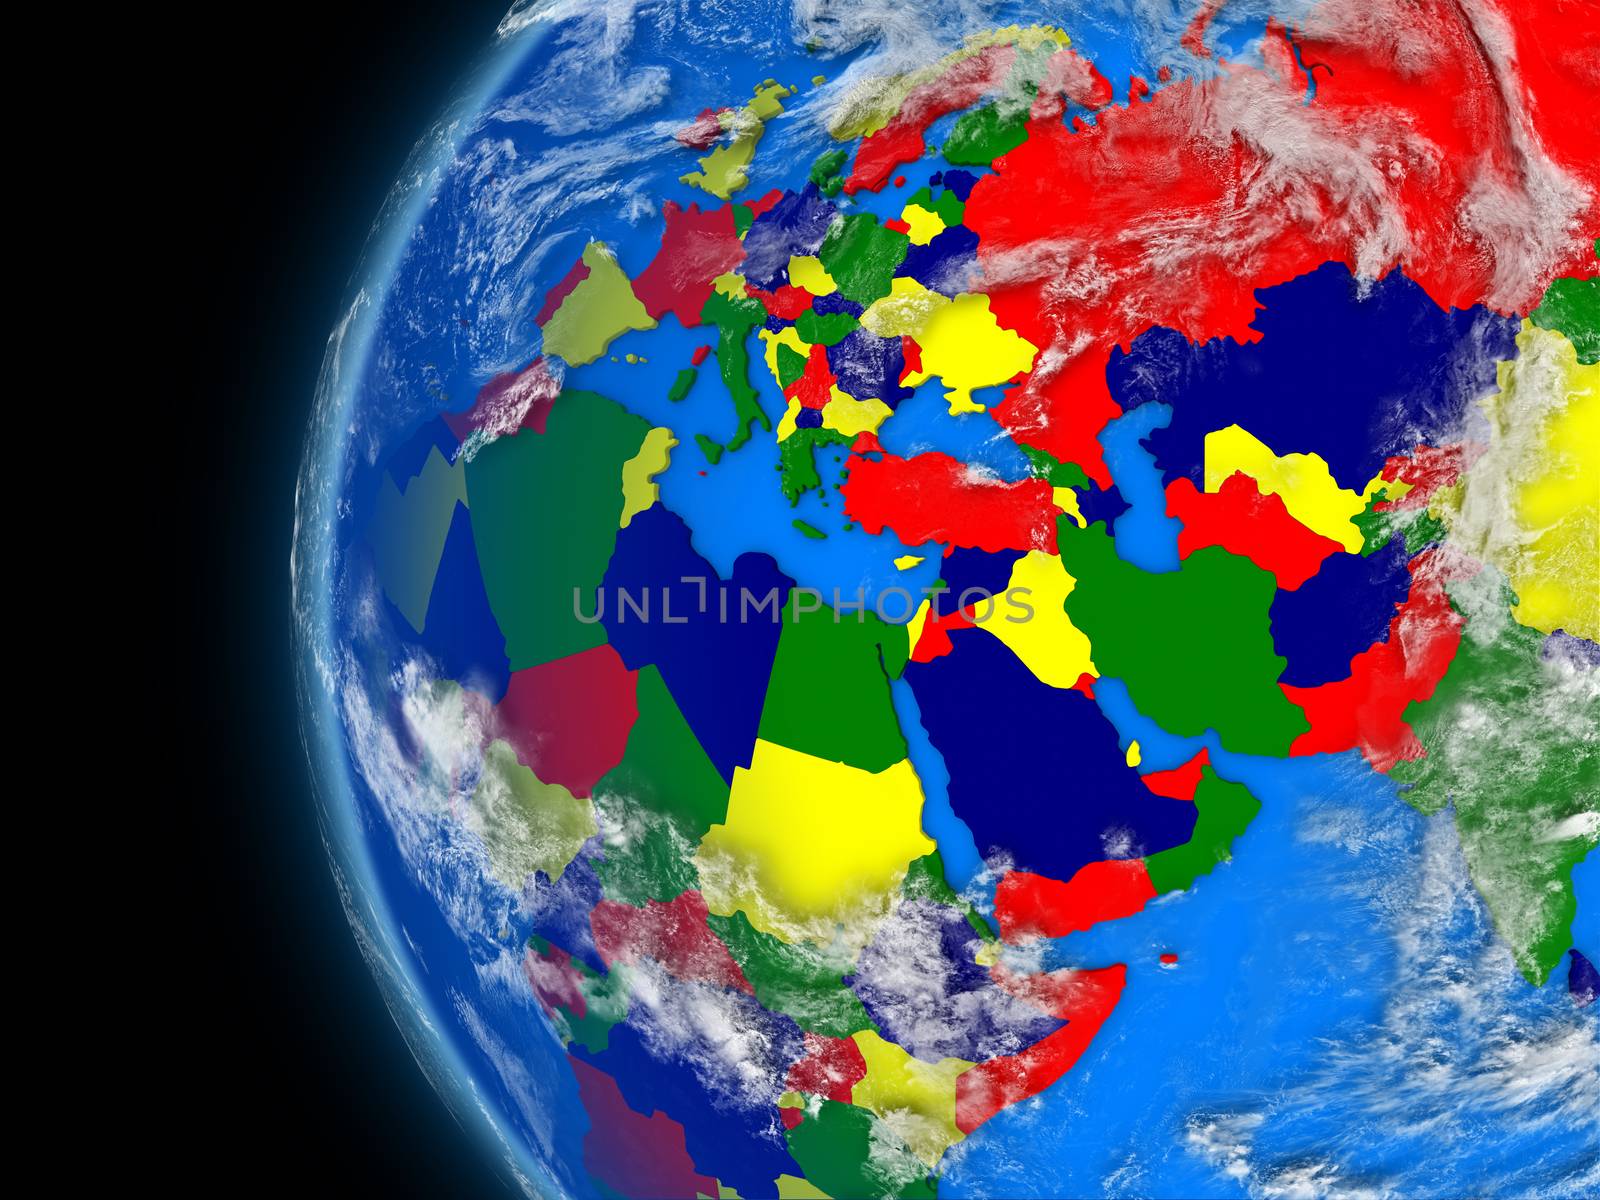 EMEA region on political globe by Harvepino